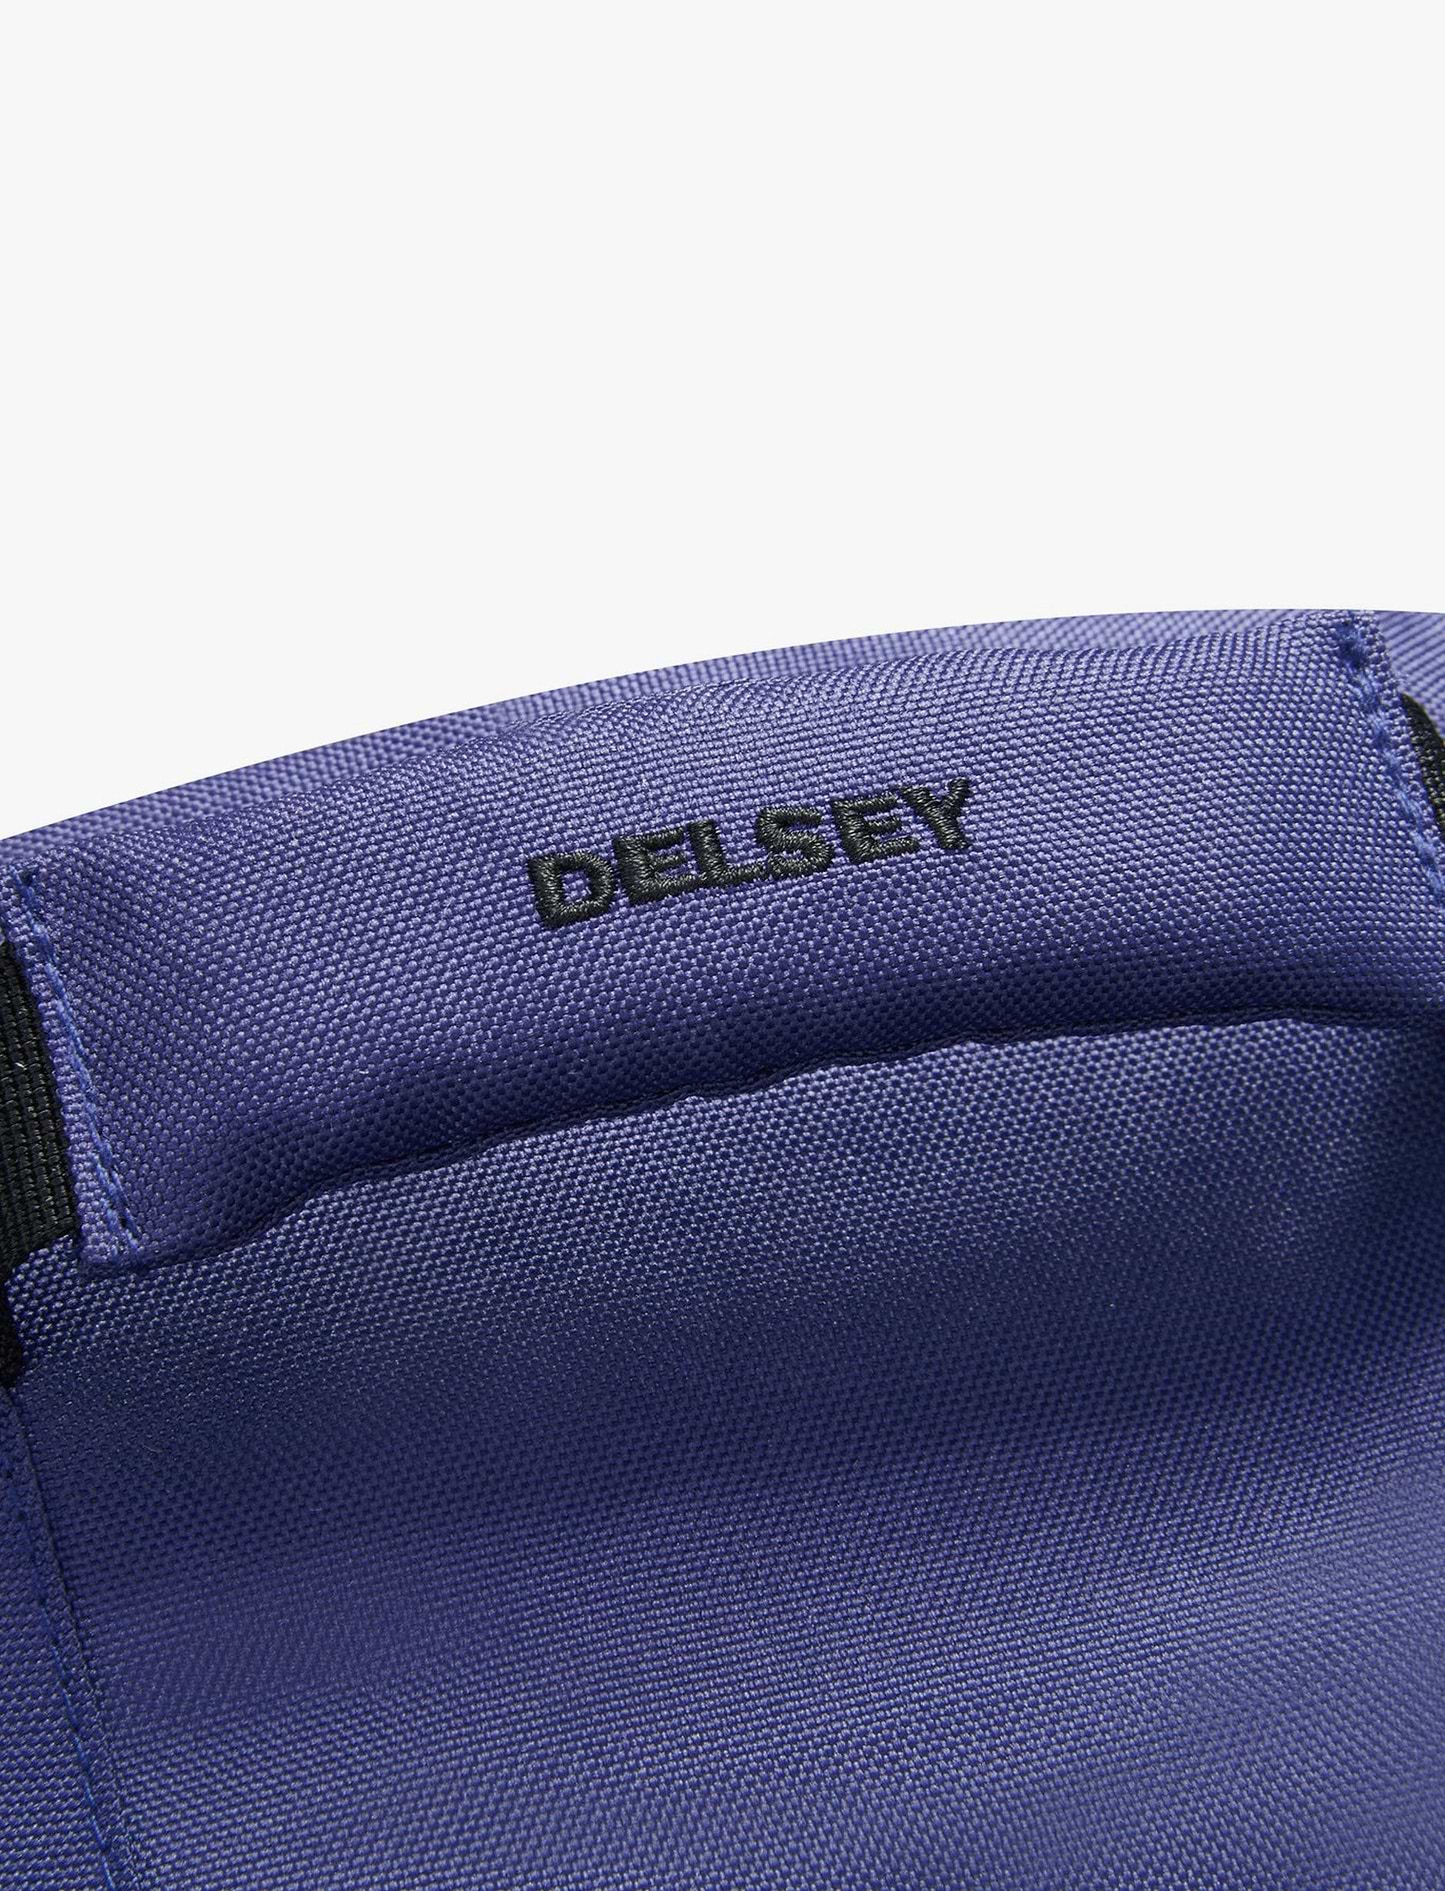 Delsey Securban - תיק גב דלסי למחשב נייד '15.6 בצבע כחול כהה